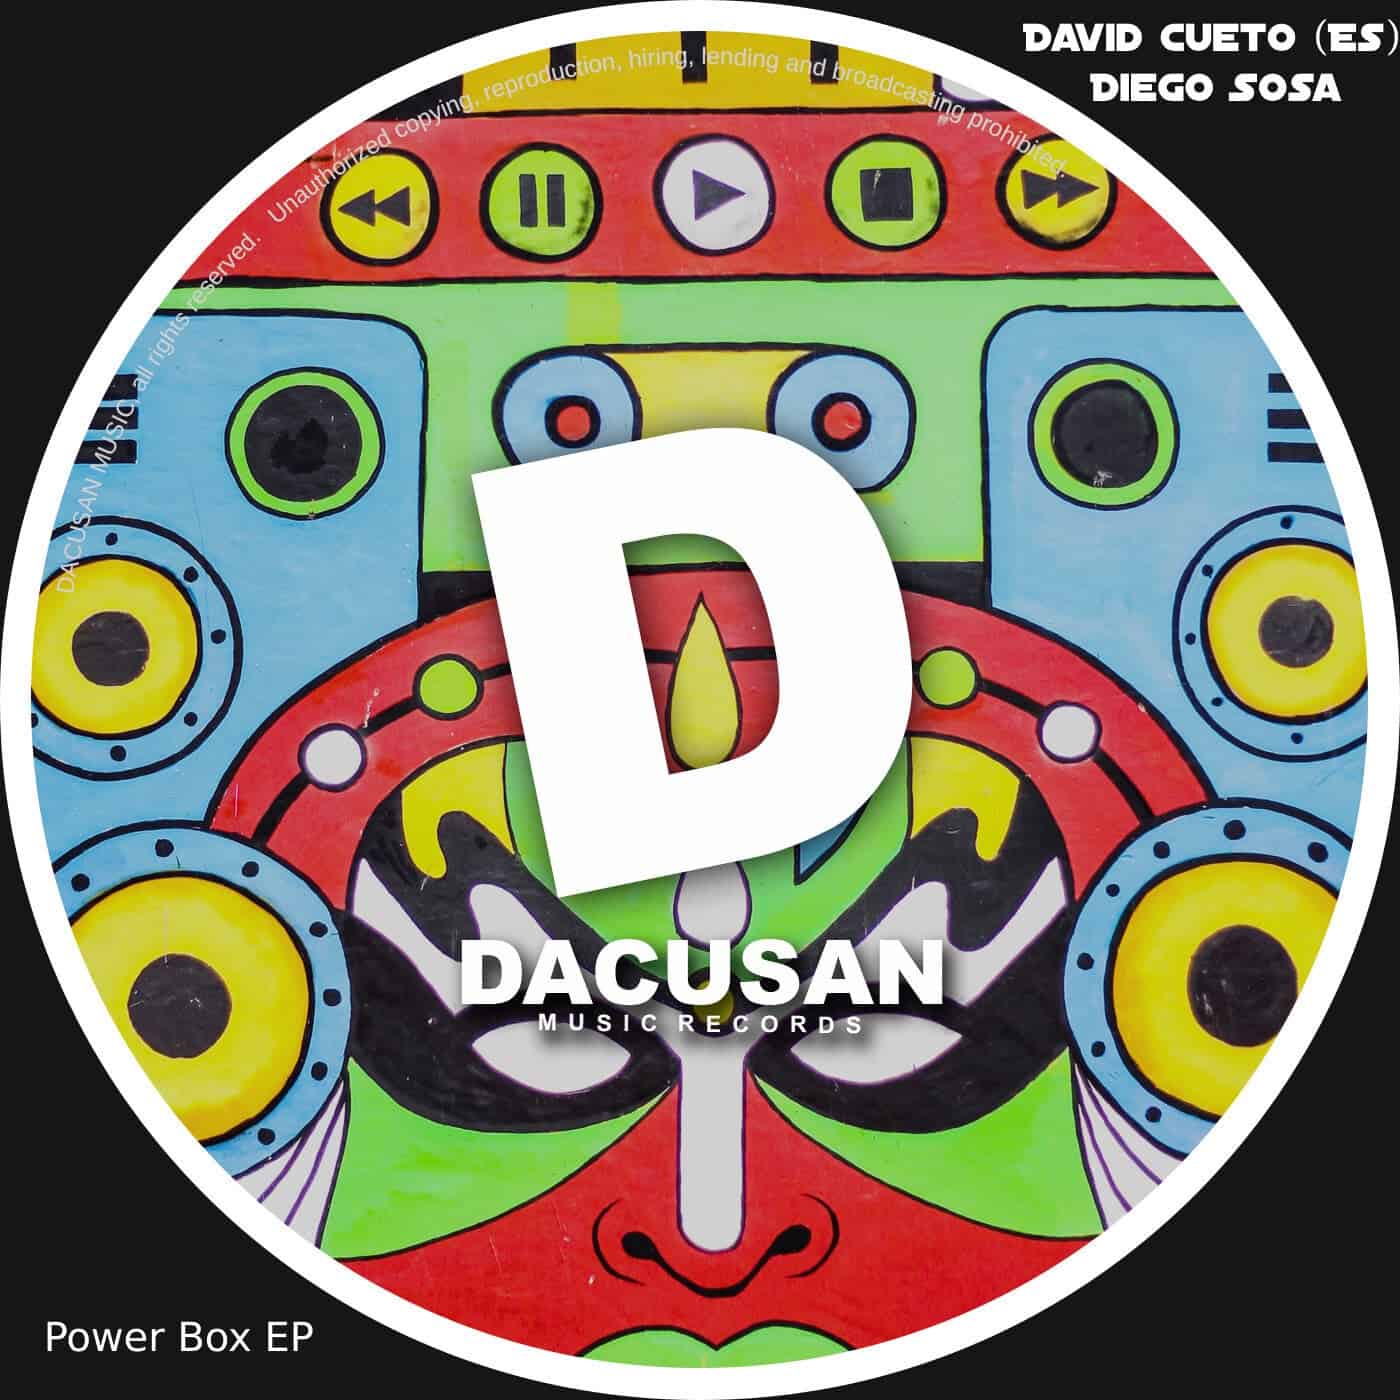 image cover: Power Box EP by David Cueto (ES), Diego Sosa on Dacusan